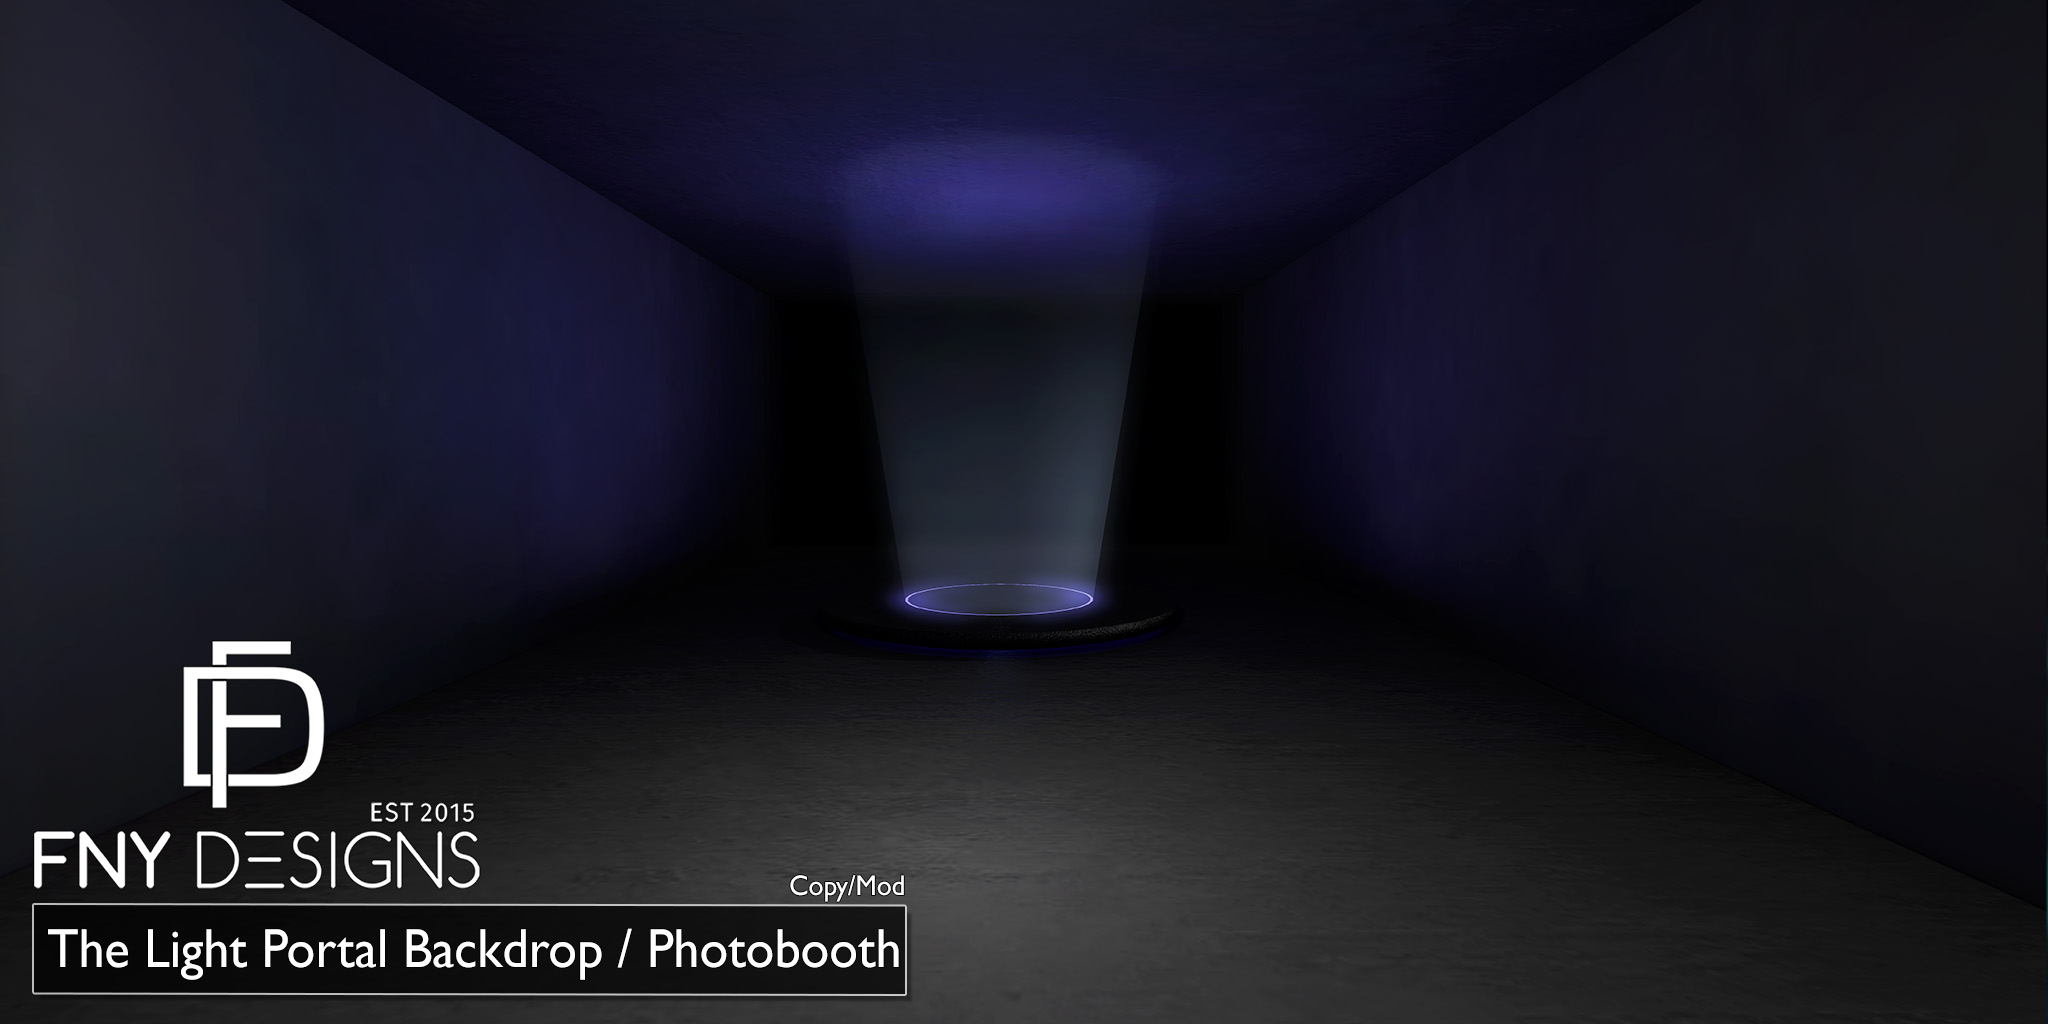 FNY Designs – The Light Portal Backdrop / Photobooth